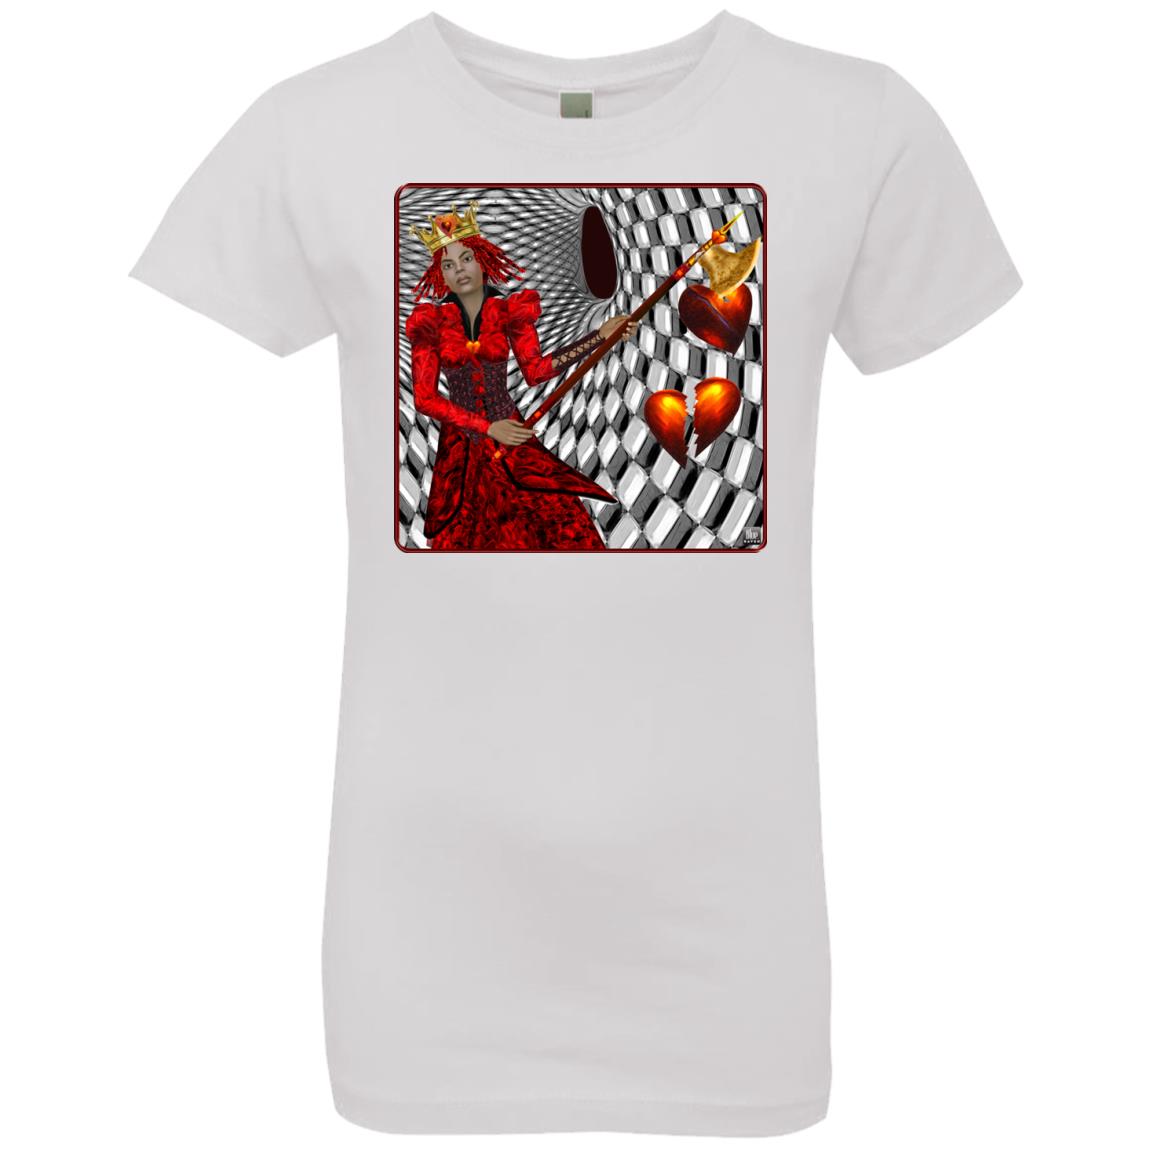 portrait of the queen of hearts - Girl's Premium Cotton T-Shirt